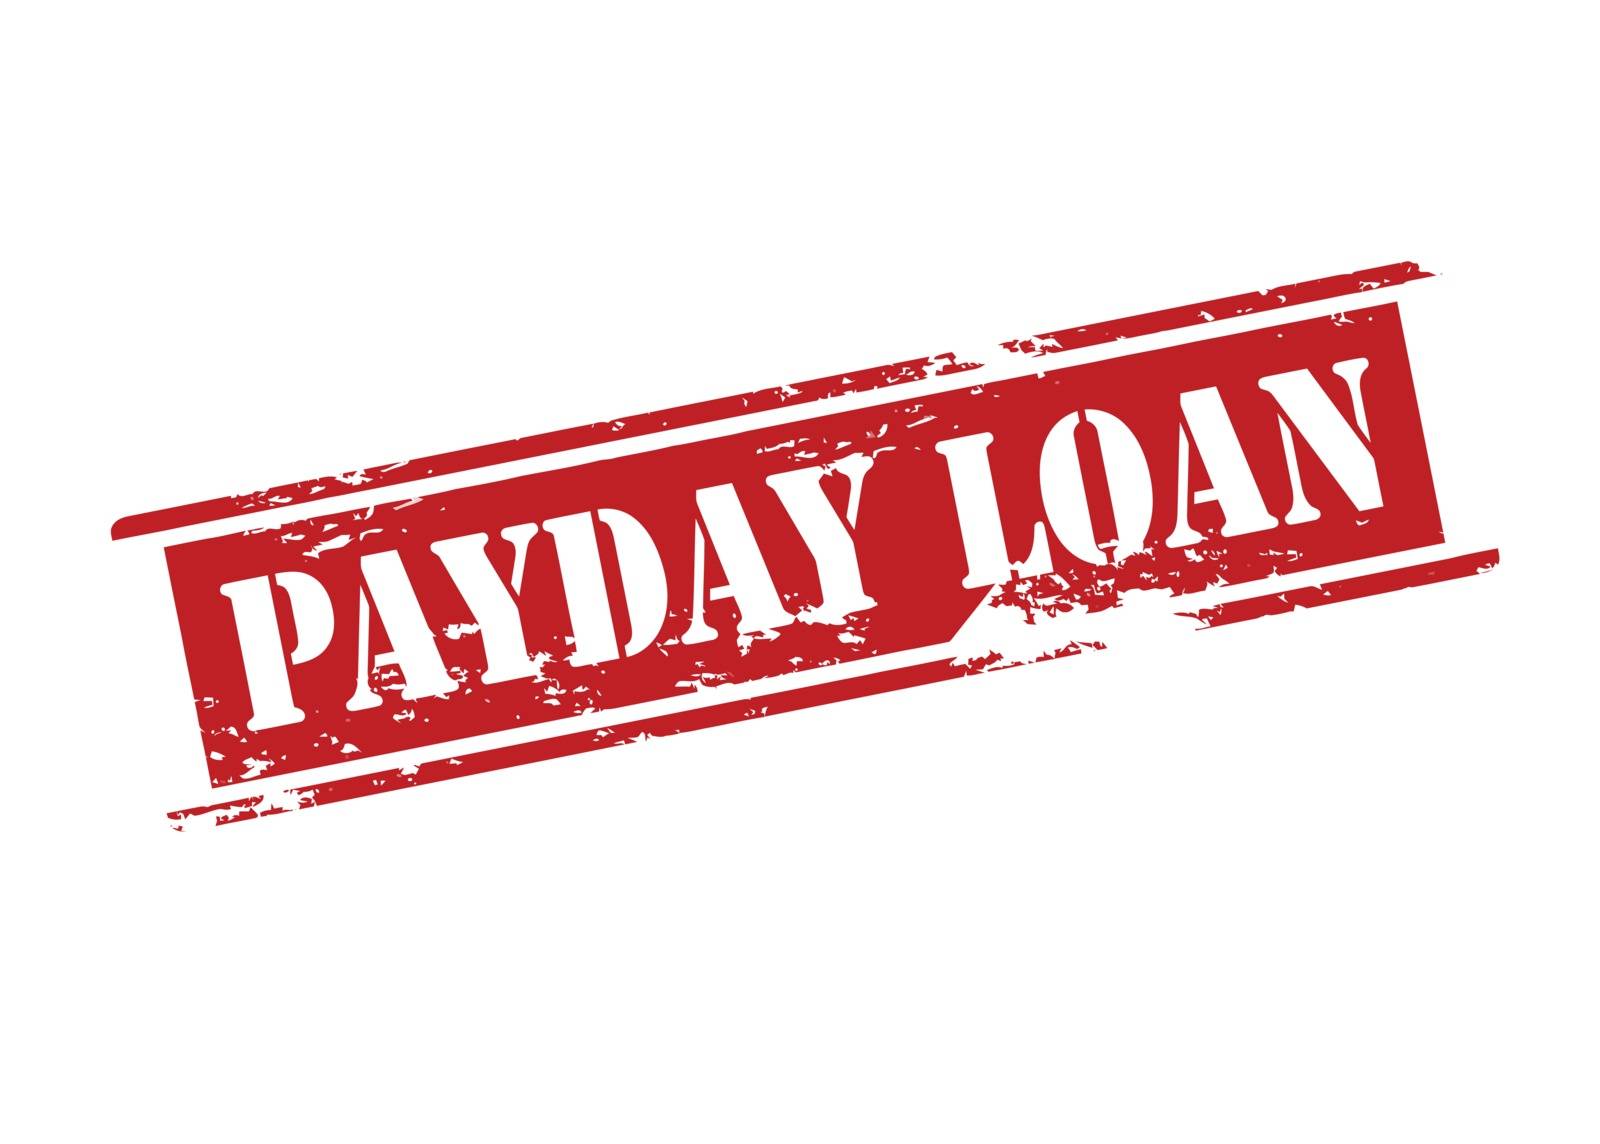 Payday loan by carmenbobo